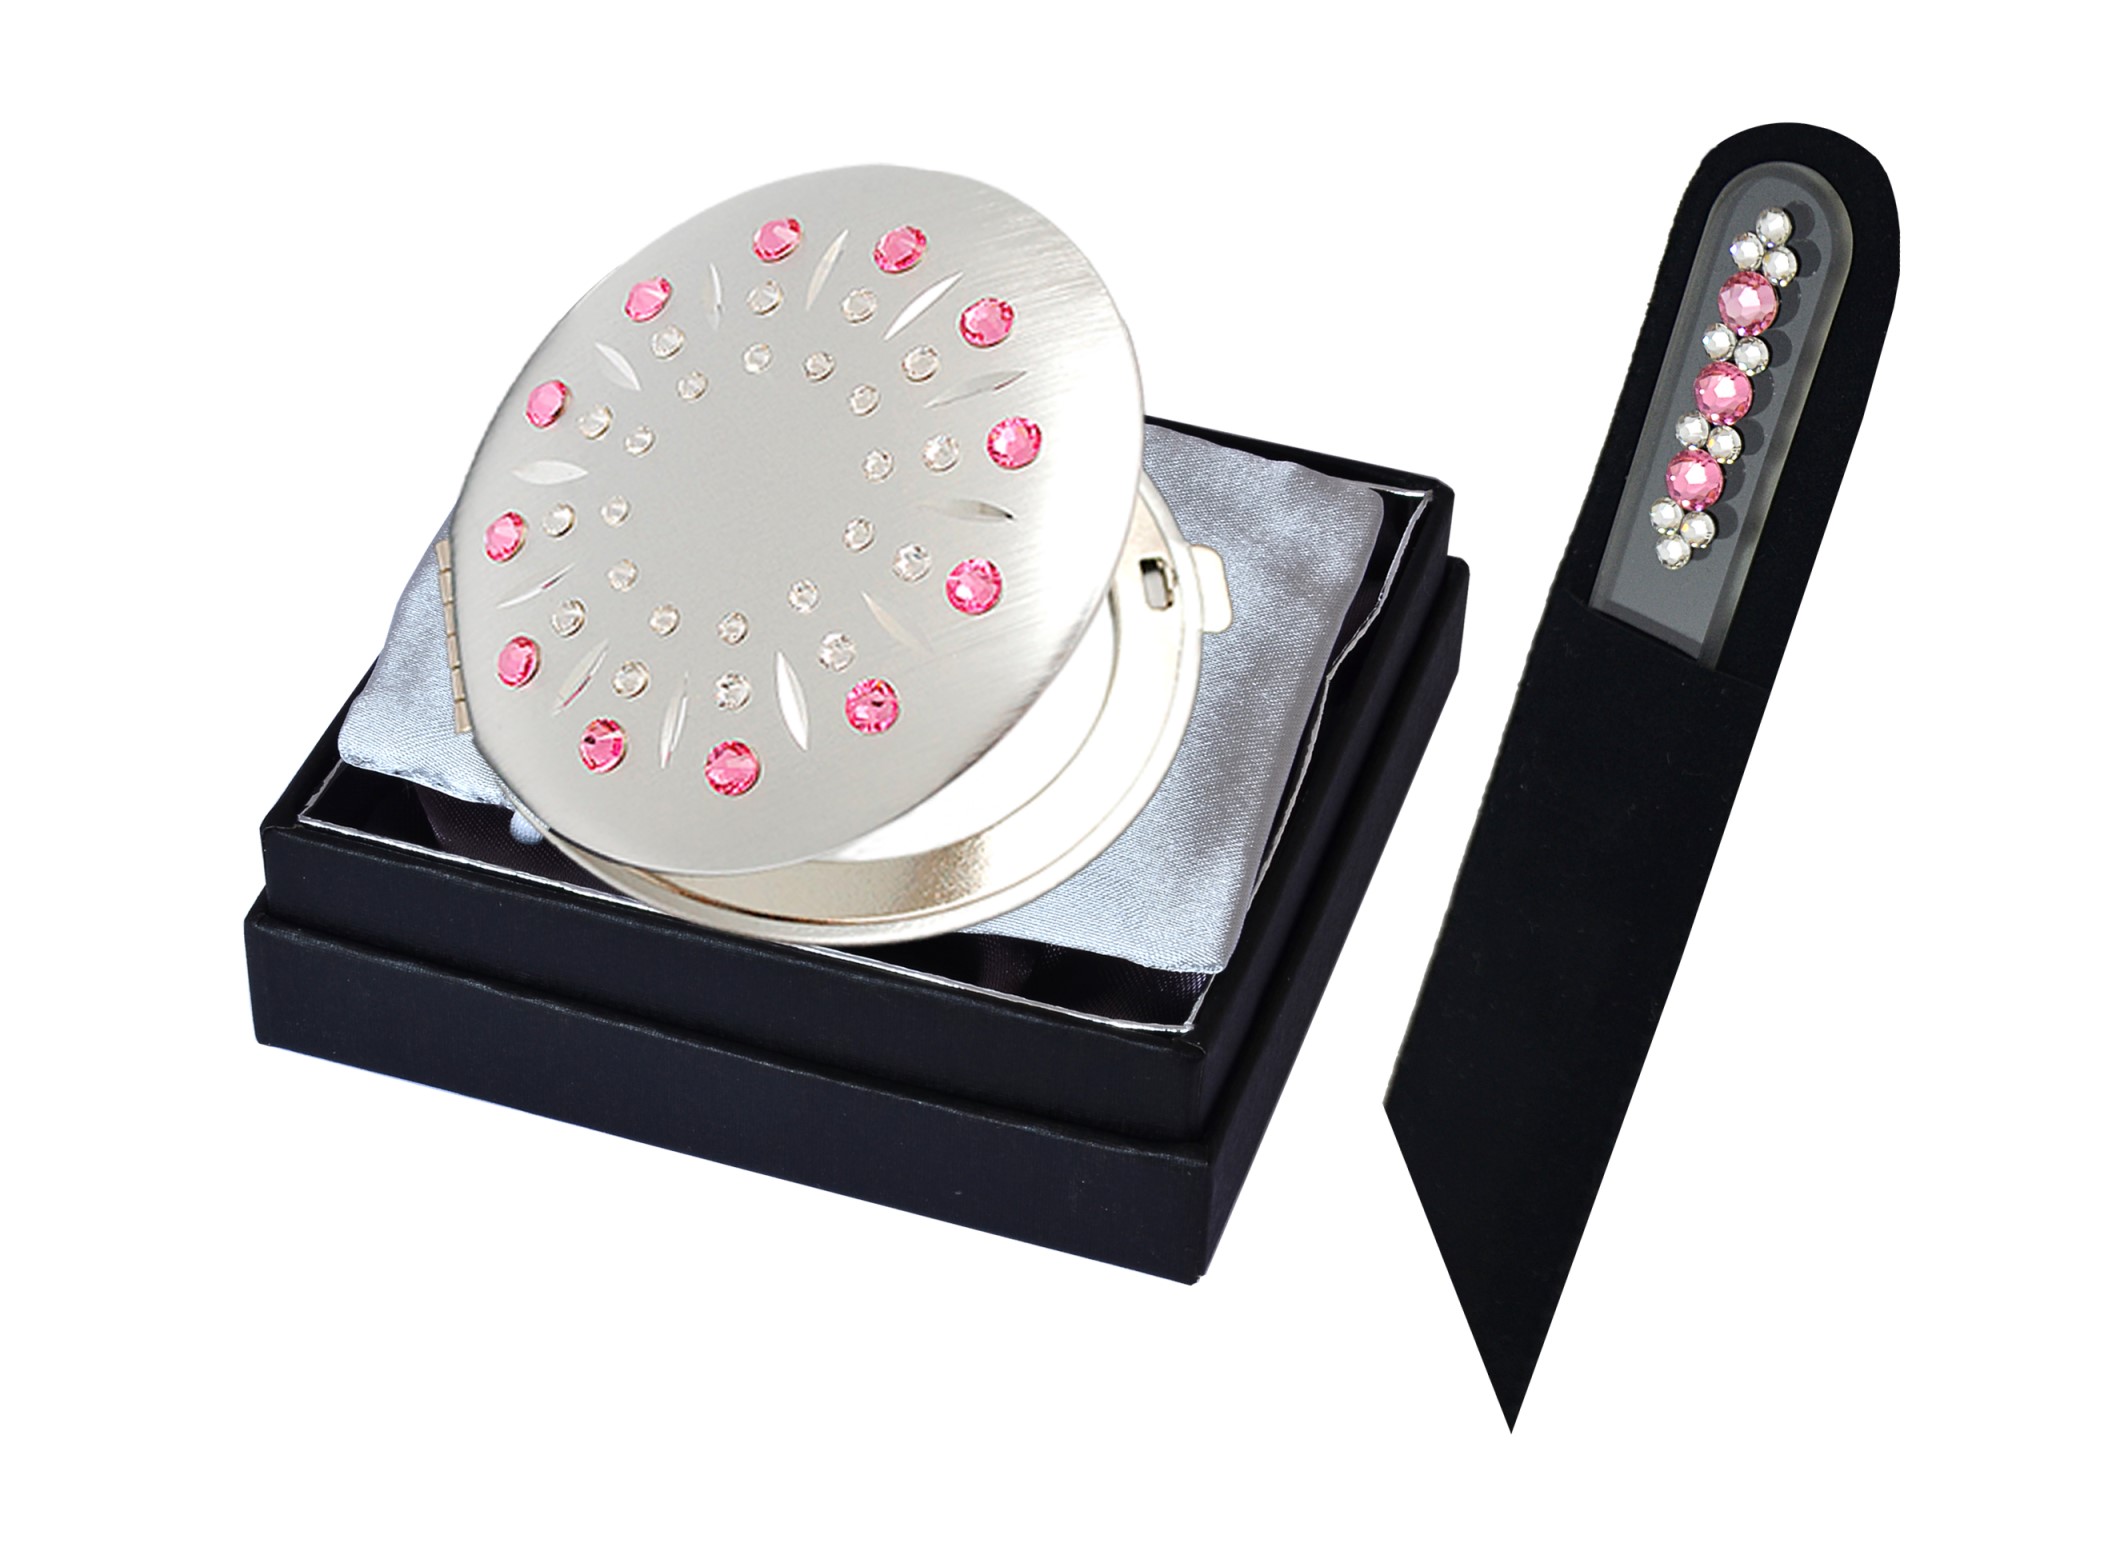 Komplet lusterko EL-01.1 Pink Sun + pilnik czeski EL-5011, 5092 ze Swarovski® crystals 13 cm